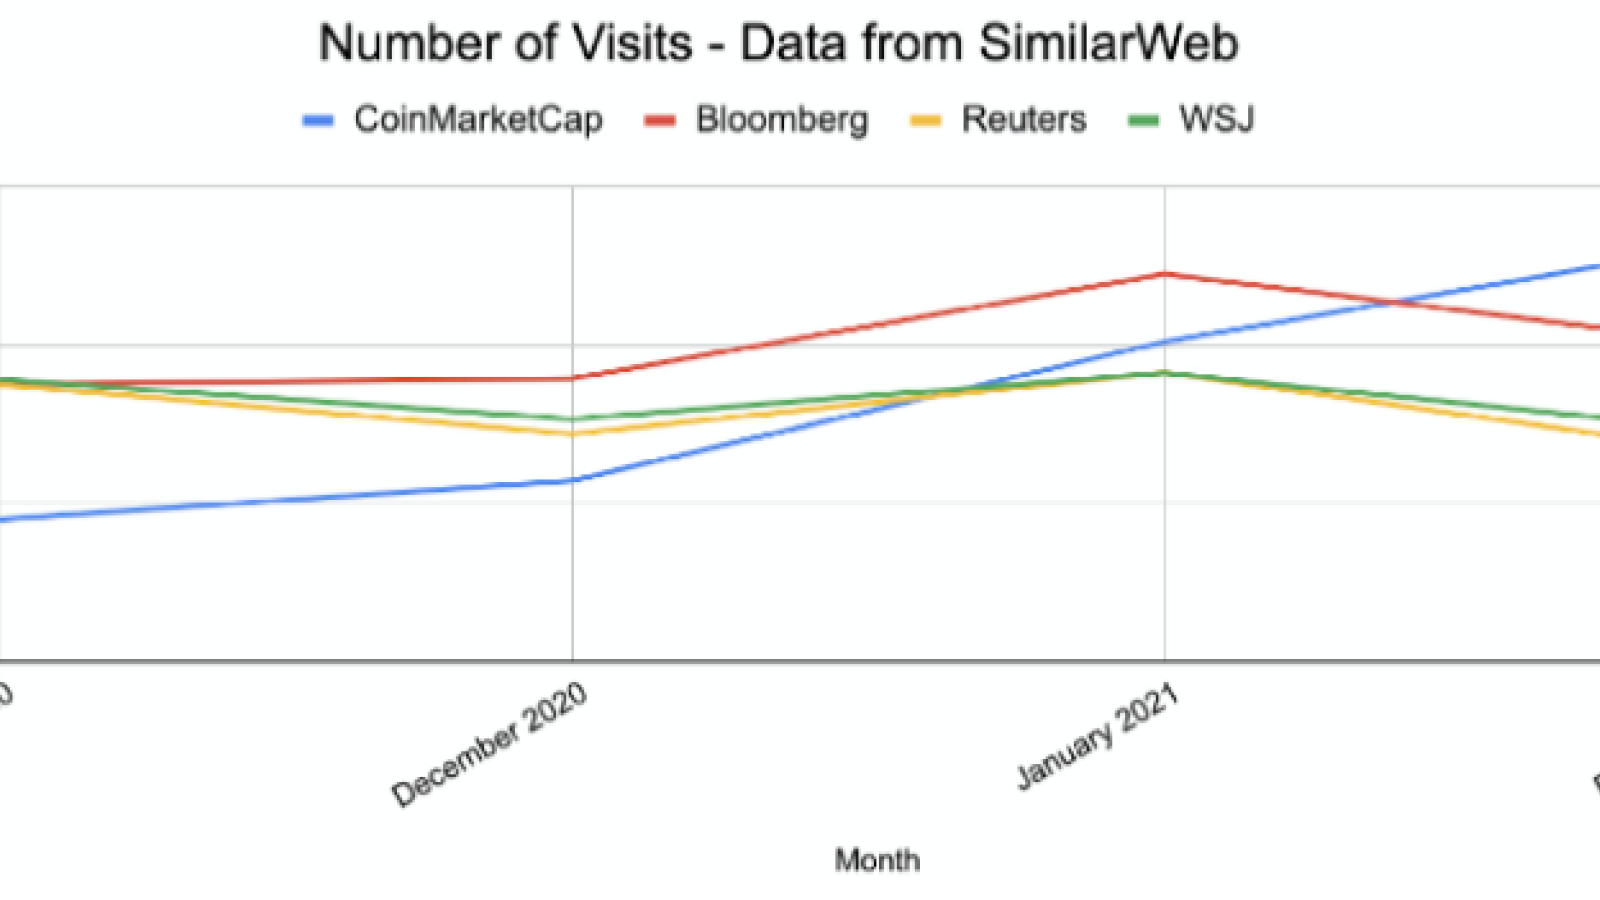 CMC breaks above 100M visitors